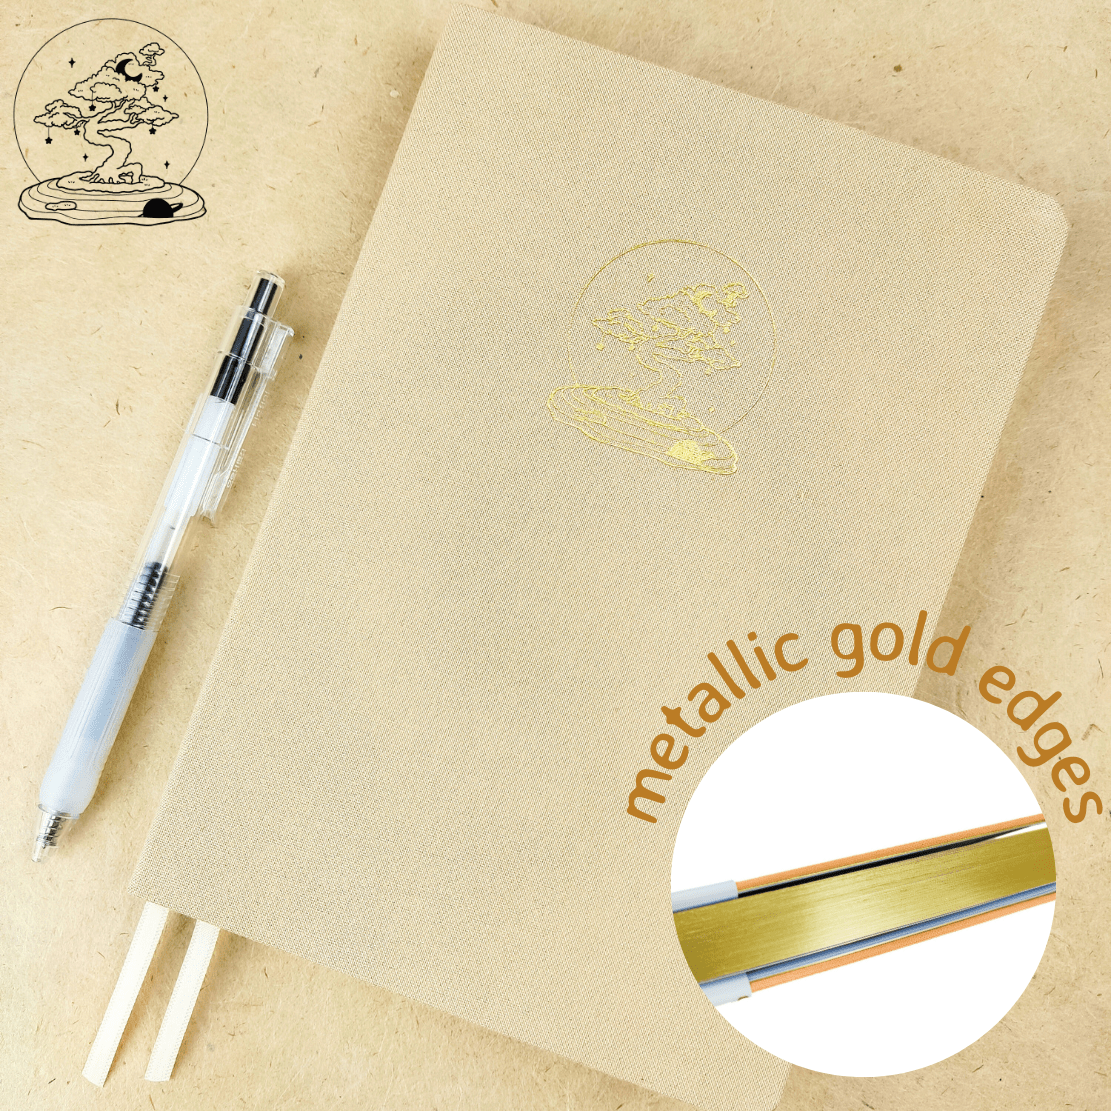 KUMA Stationery & Crafts Notebooks & Notepads A5 Luna 'Ukiyo 浮世' Limited Edition Bullet Journal 🌙